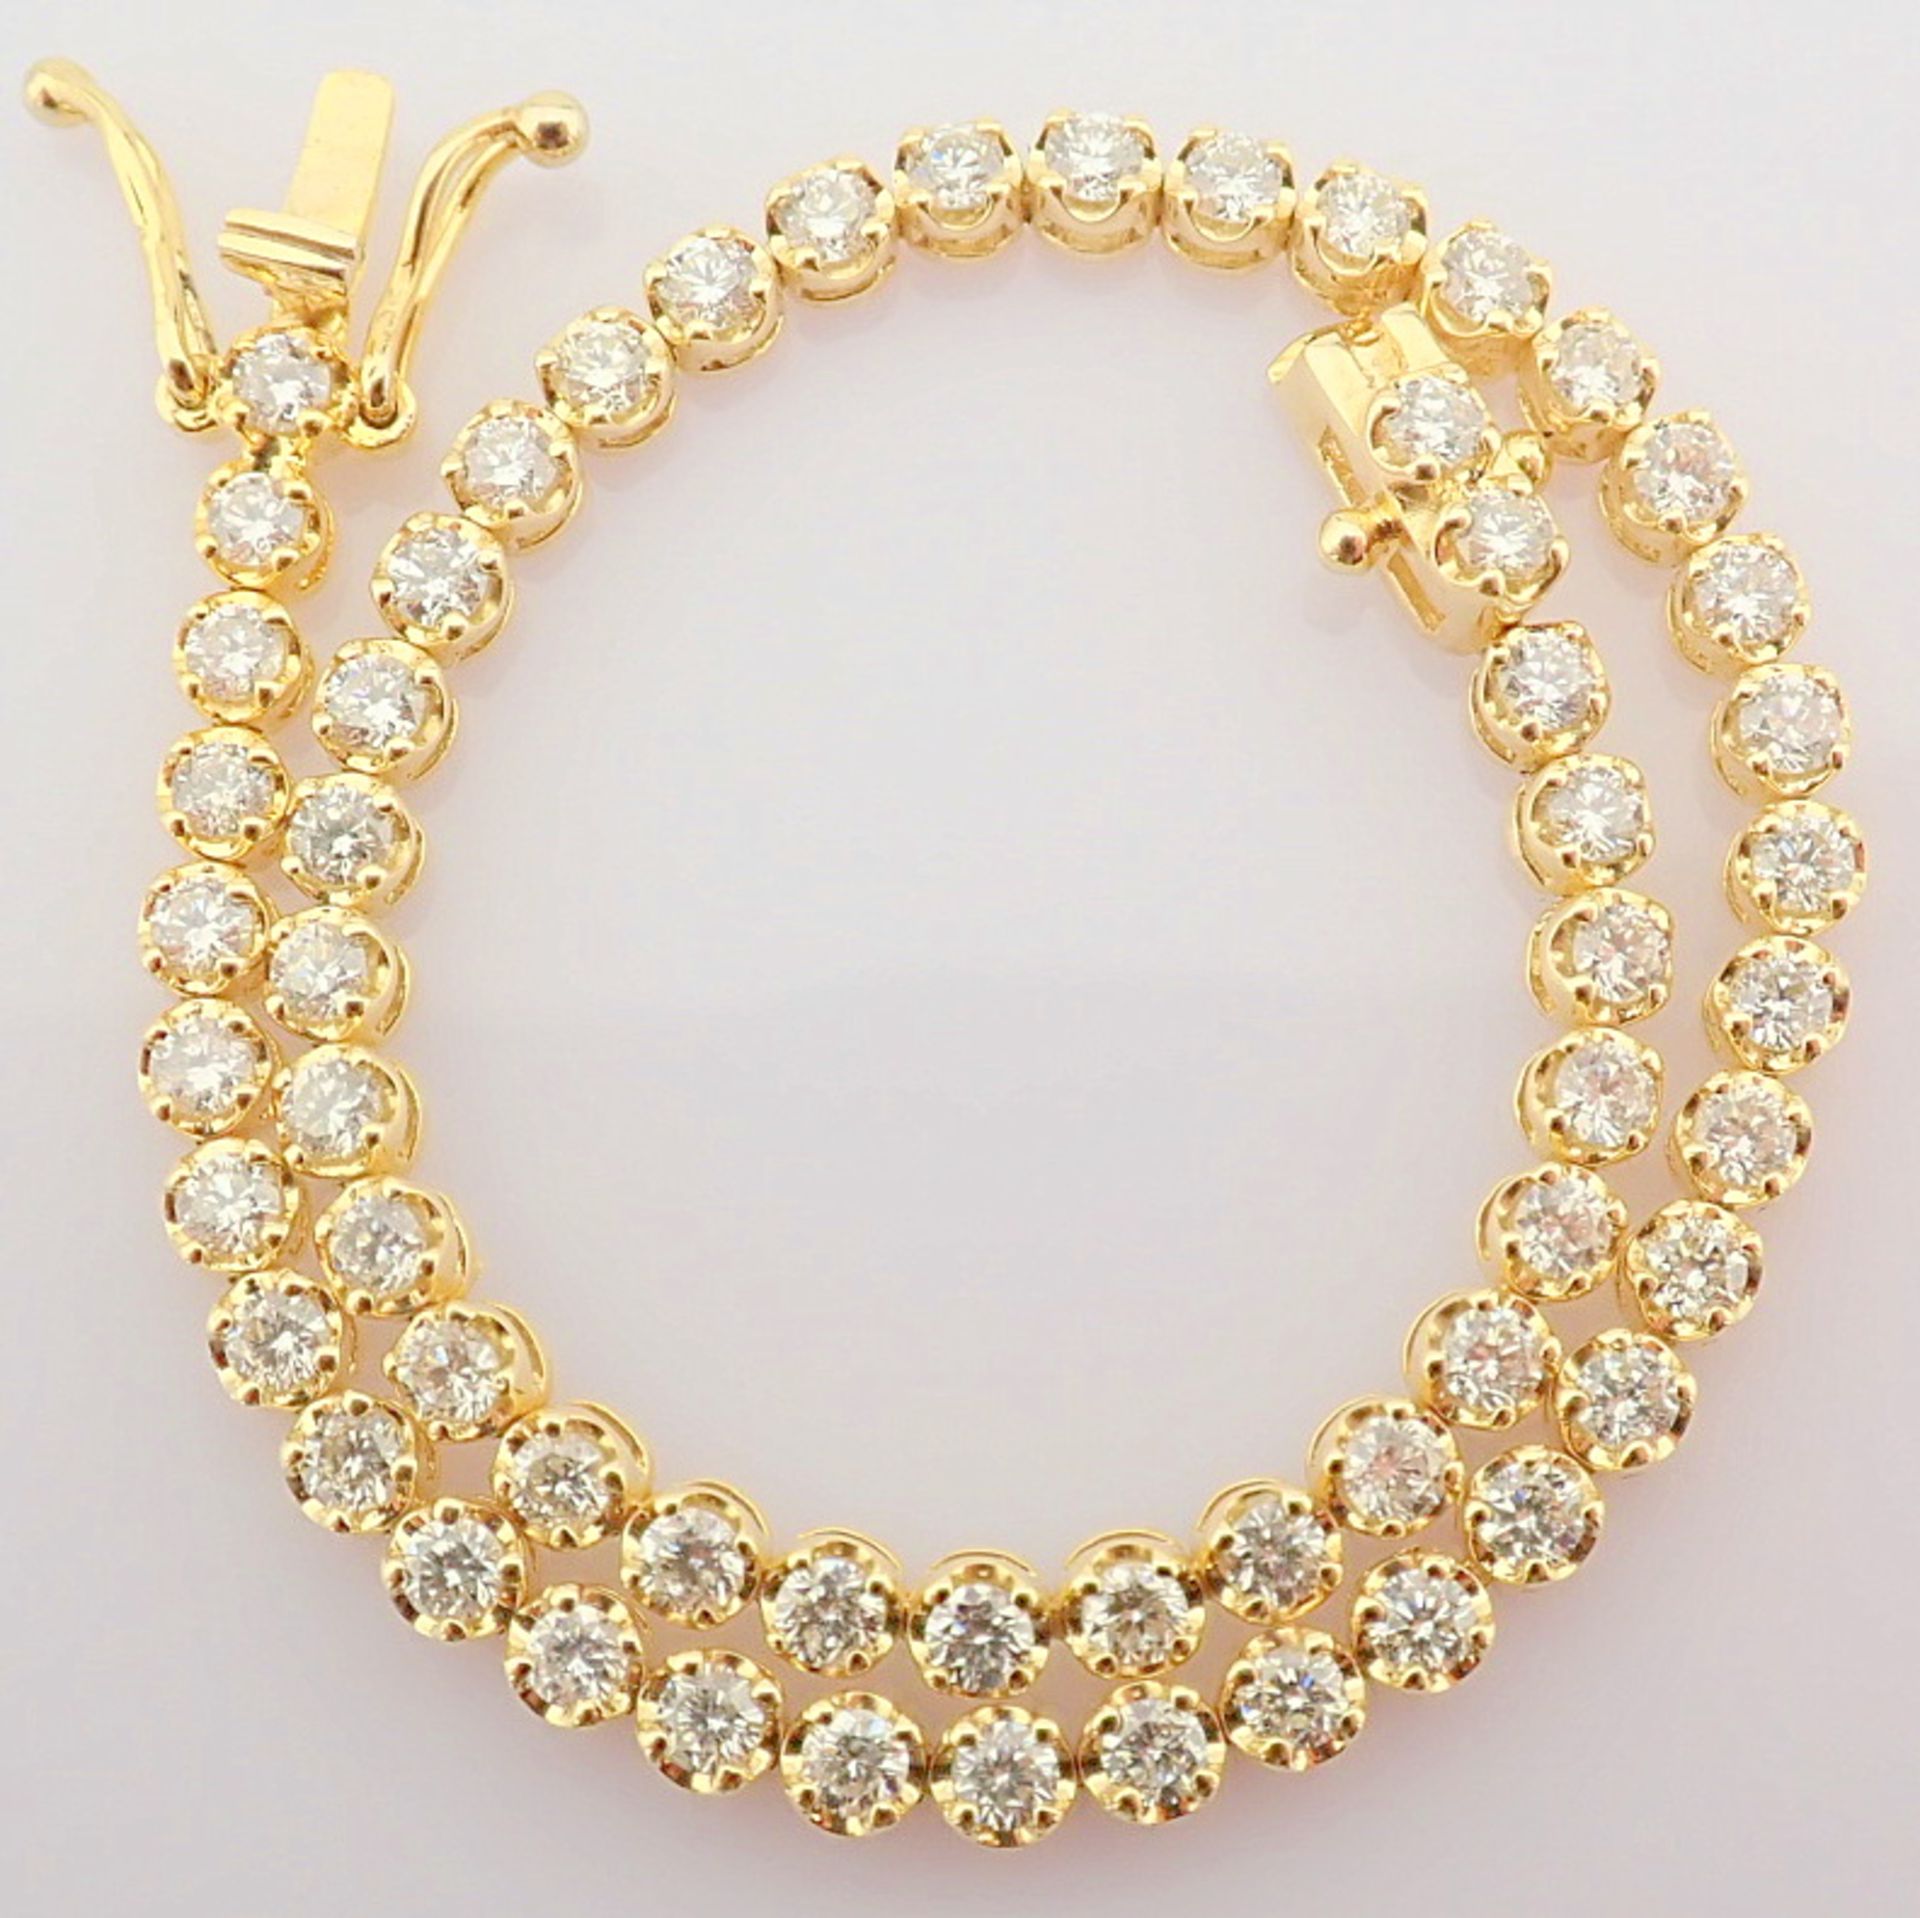 2,10 Ct. Diamond Tennis Bracelet (Crown) - 14K Yellow Gold